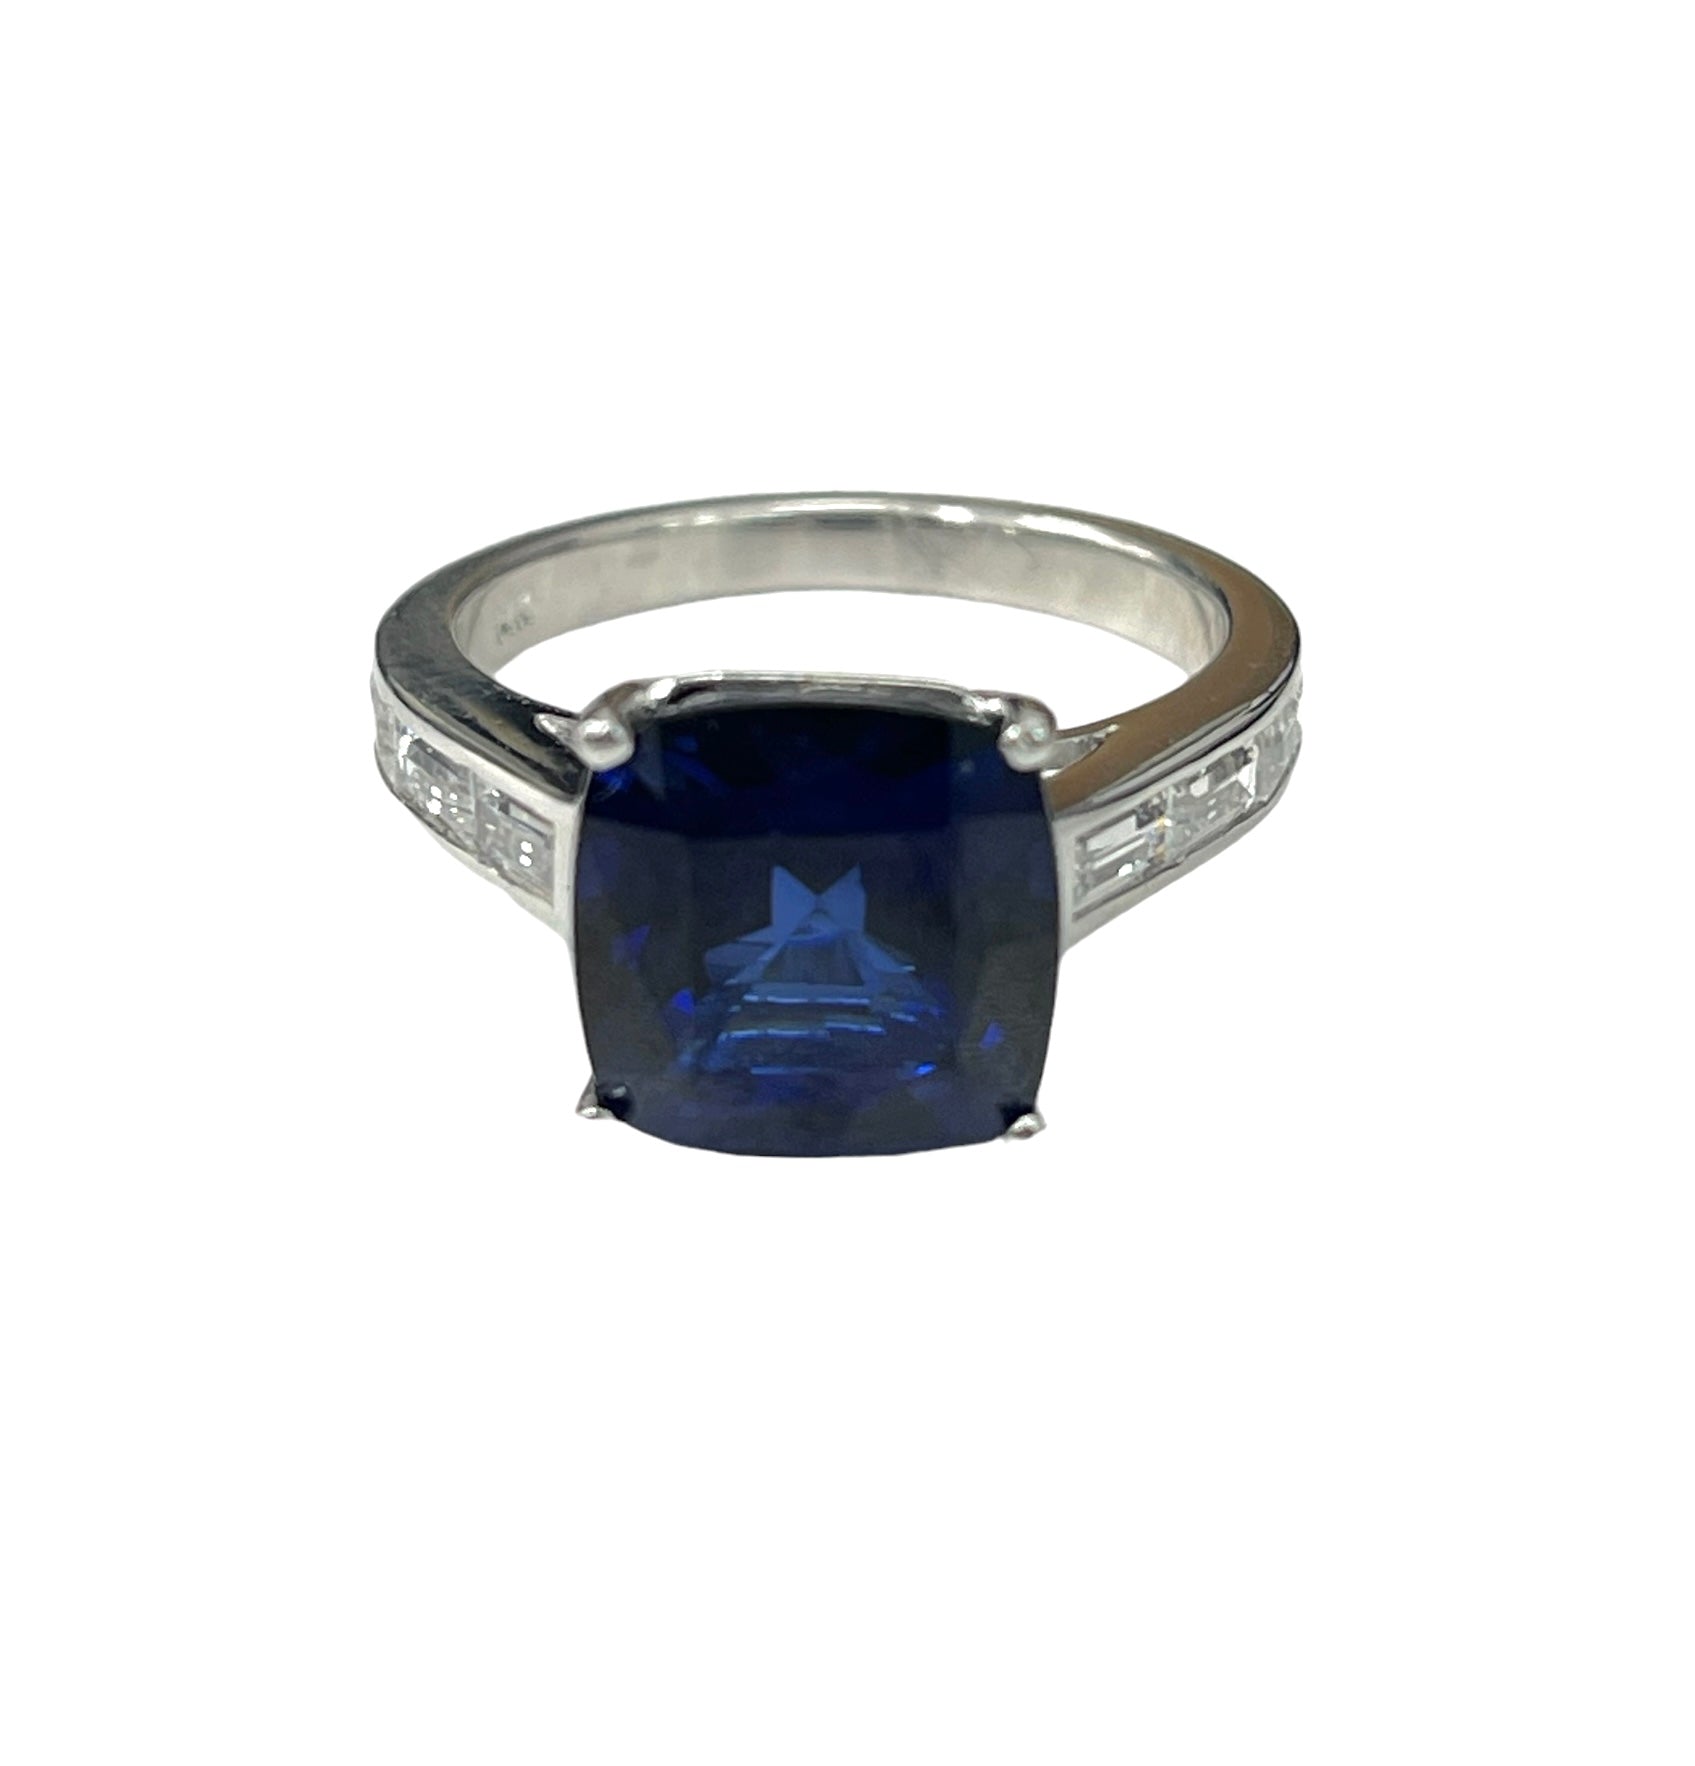 Blue Sapphire Cushion Cut Gem Diamond Ring 14kt White Gold